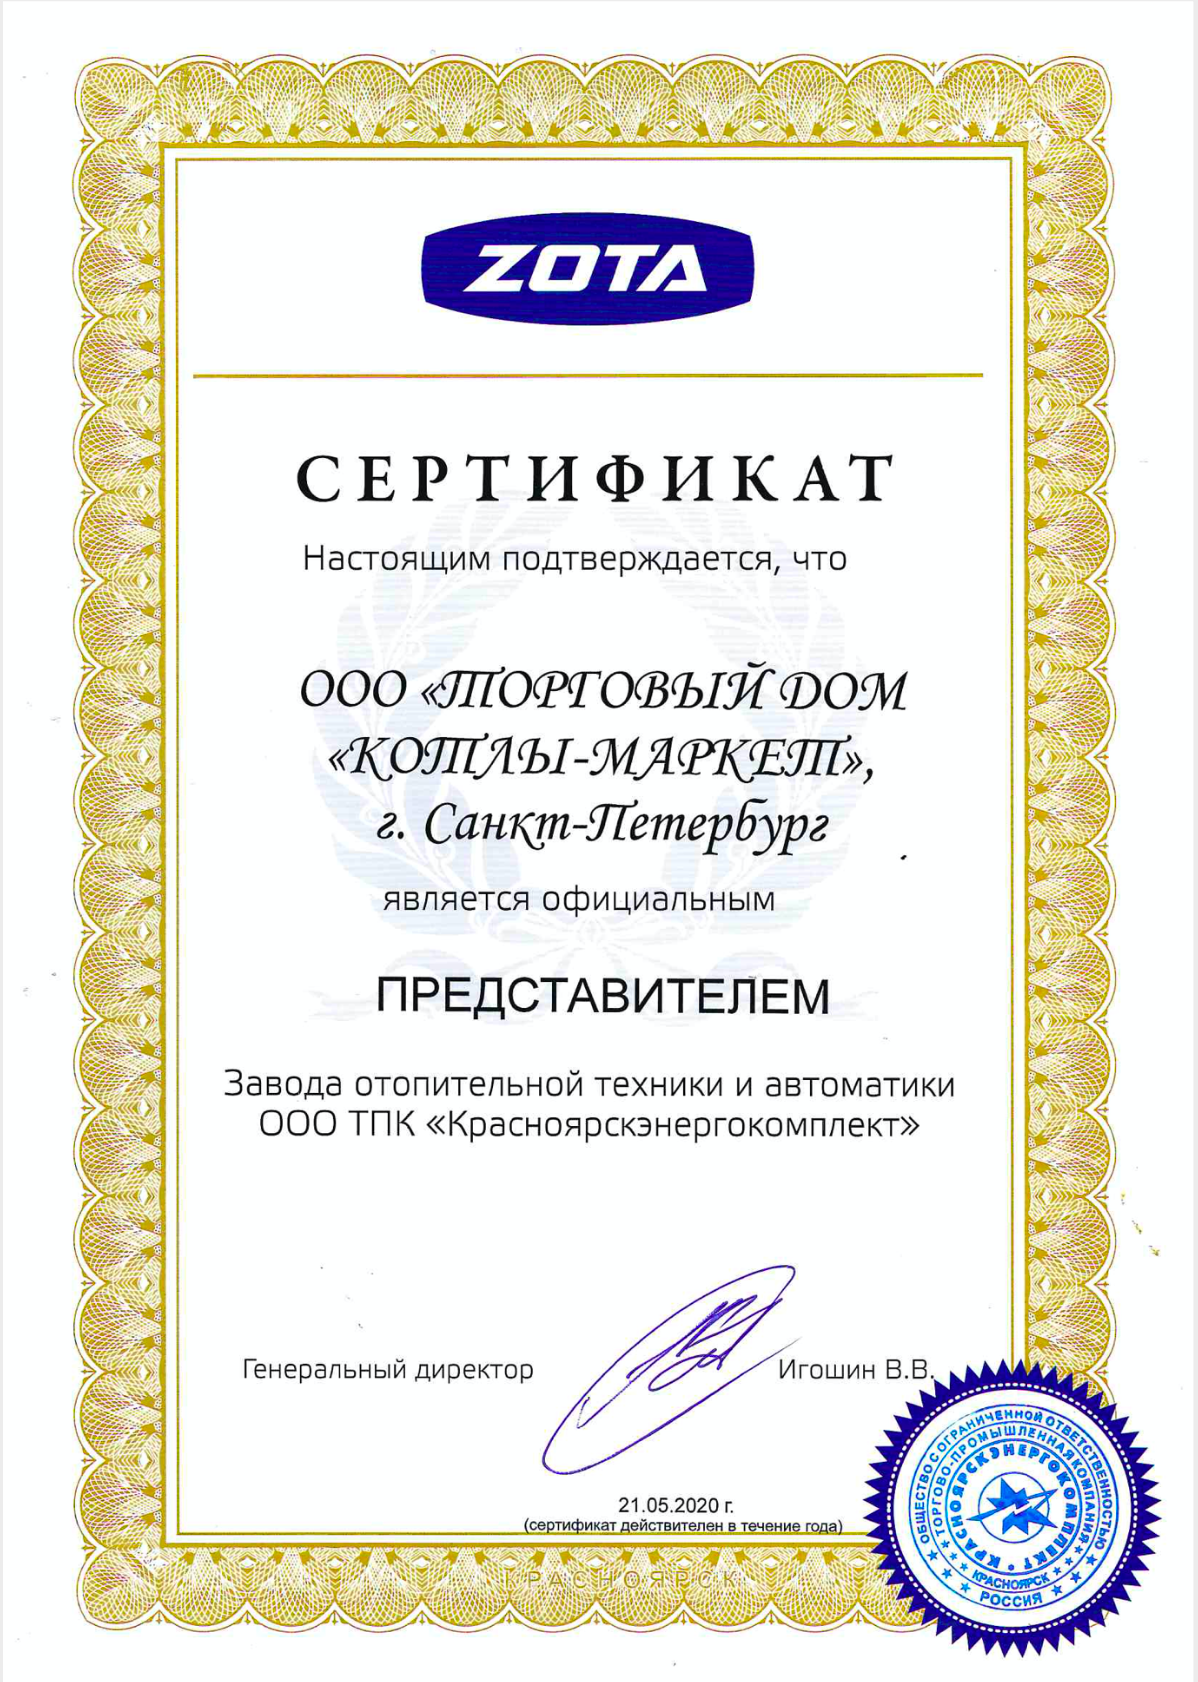 сертификат ZOTA